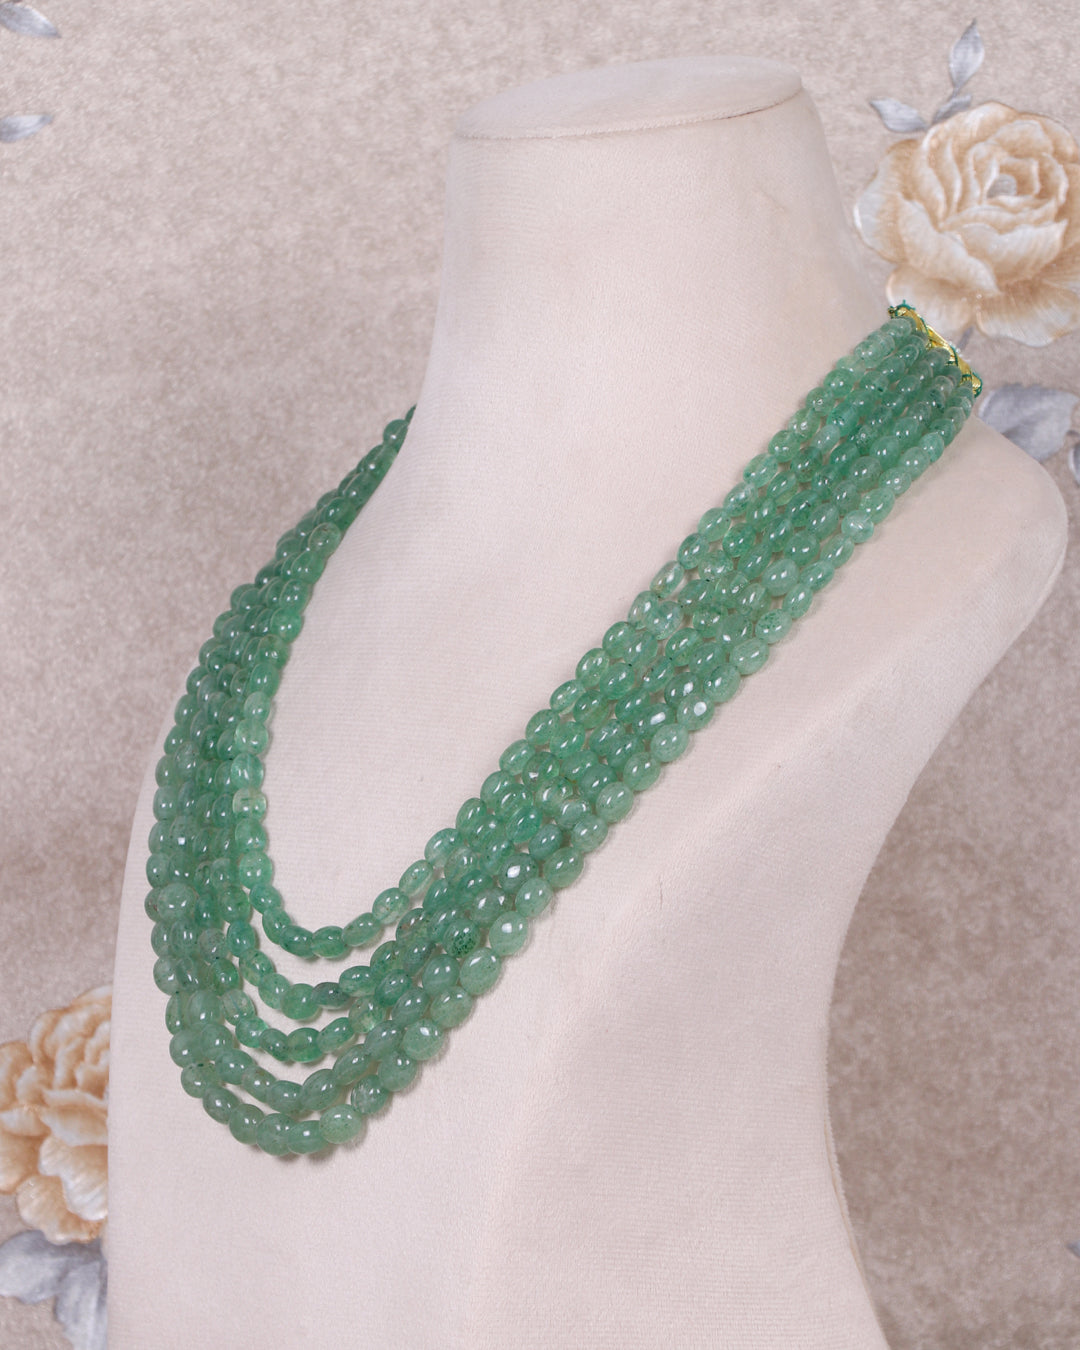 Natural Green Strawberry Quartz Gemstone Beads Necklace Jewelry